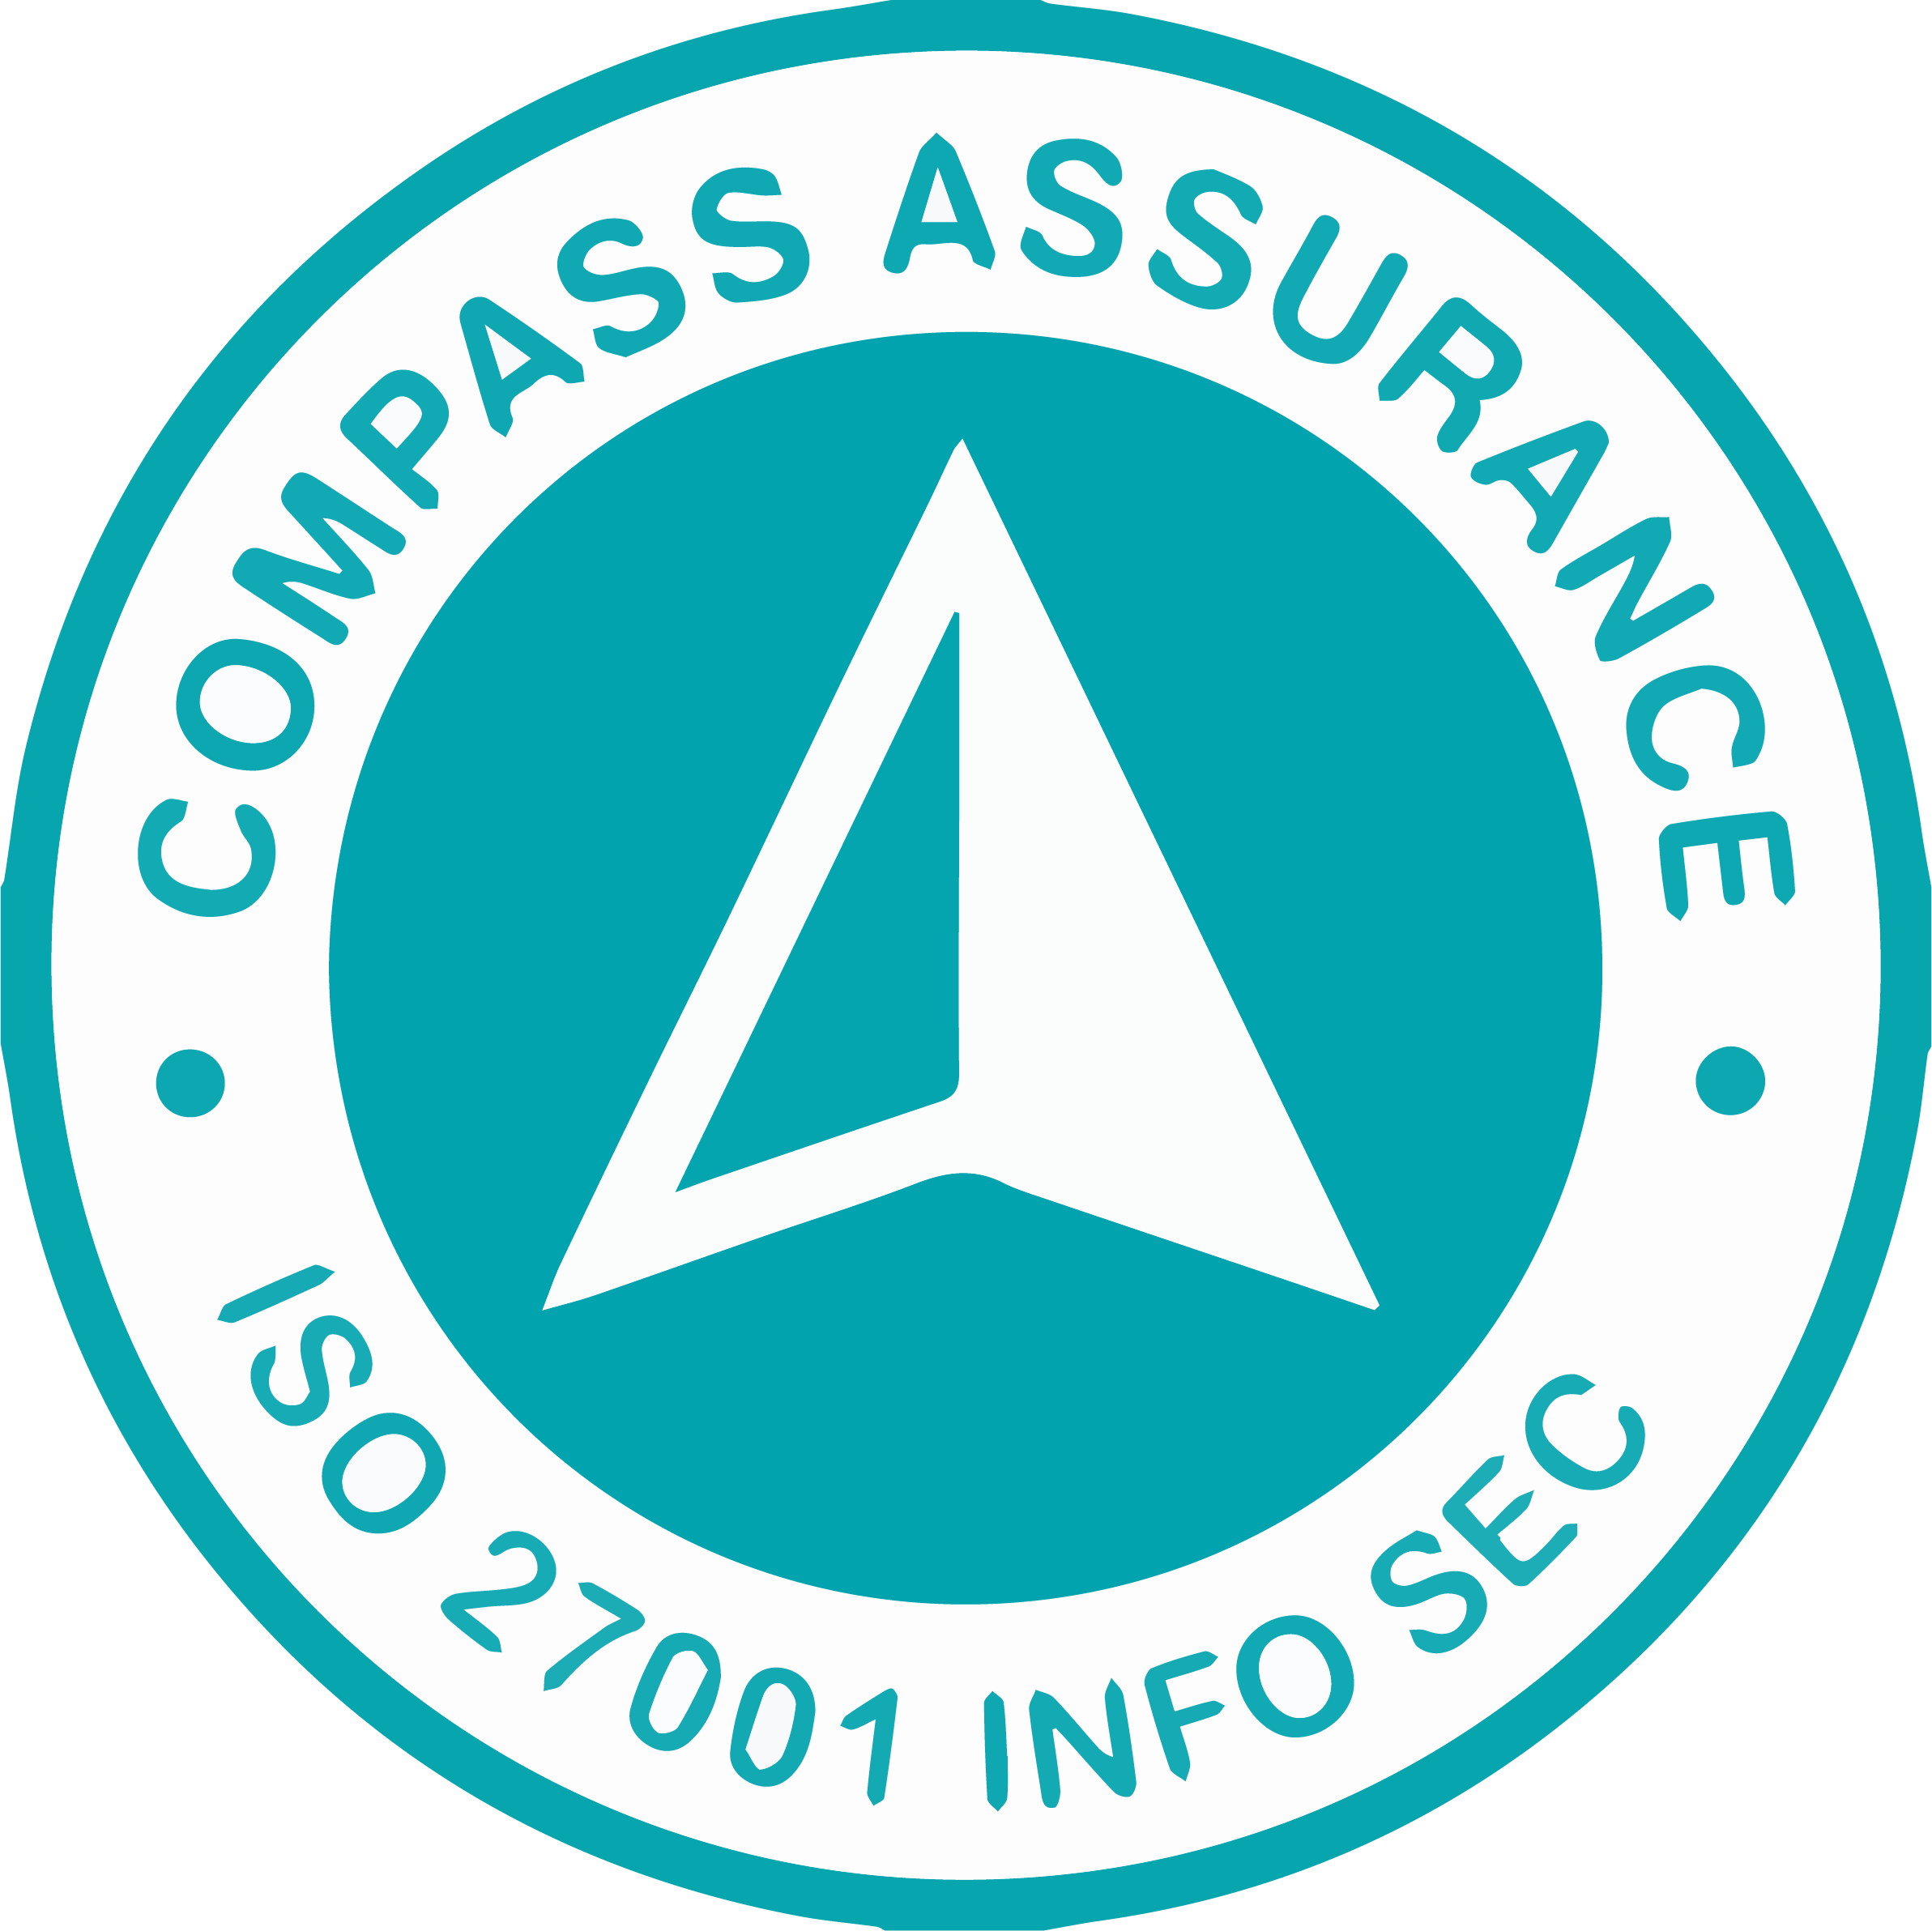 Compass ISO 27001 Circle Colour tranparent